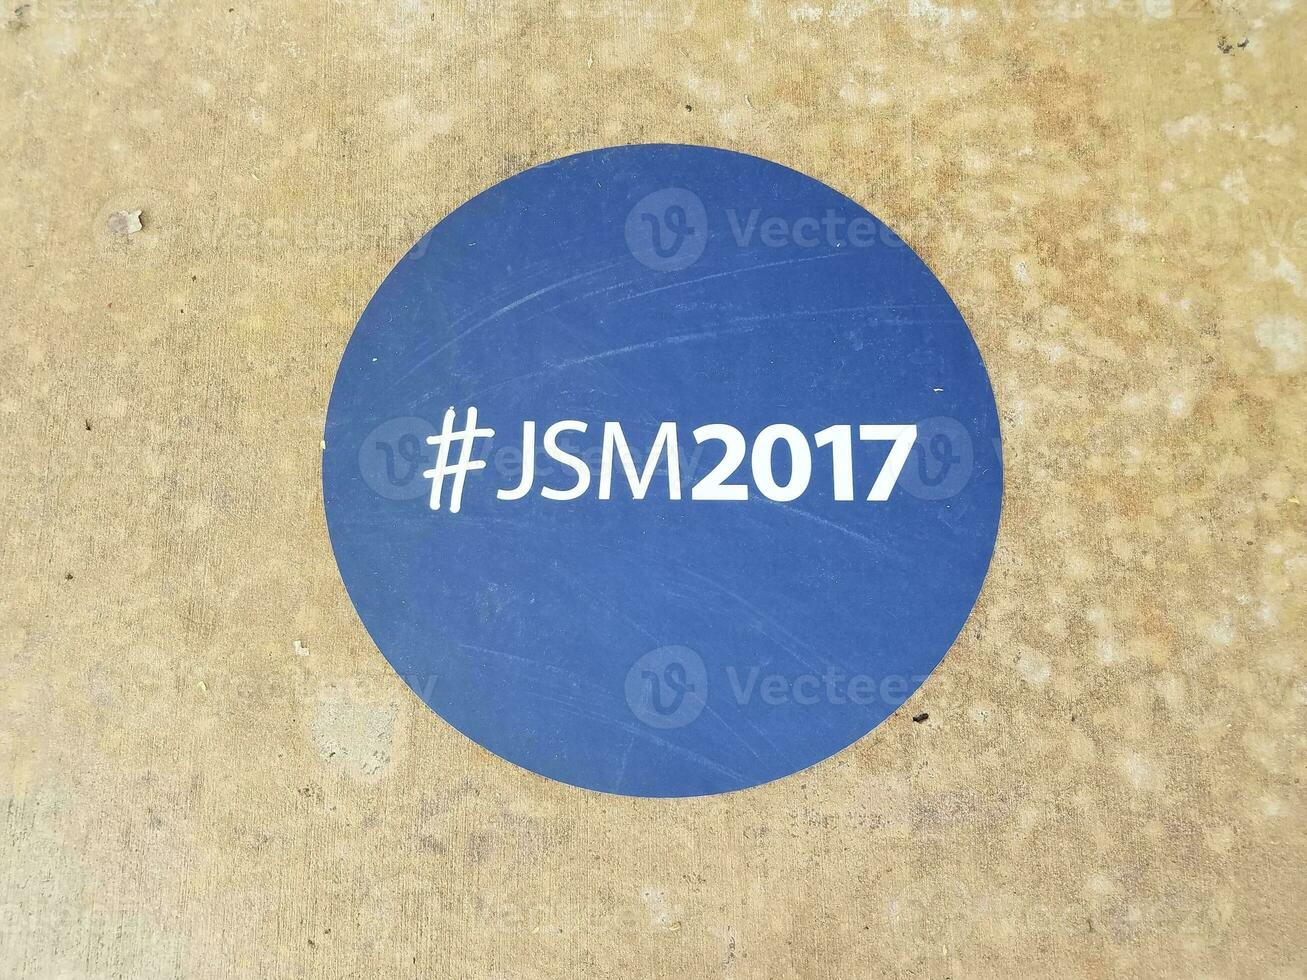 blauwe sticker op de grond met de tekst jsm2017 foto